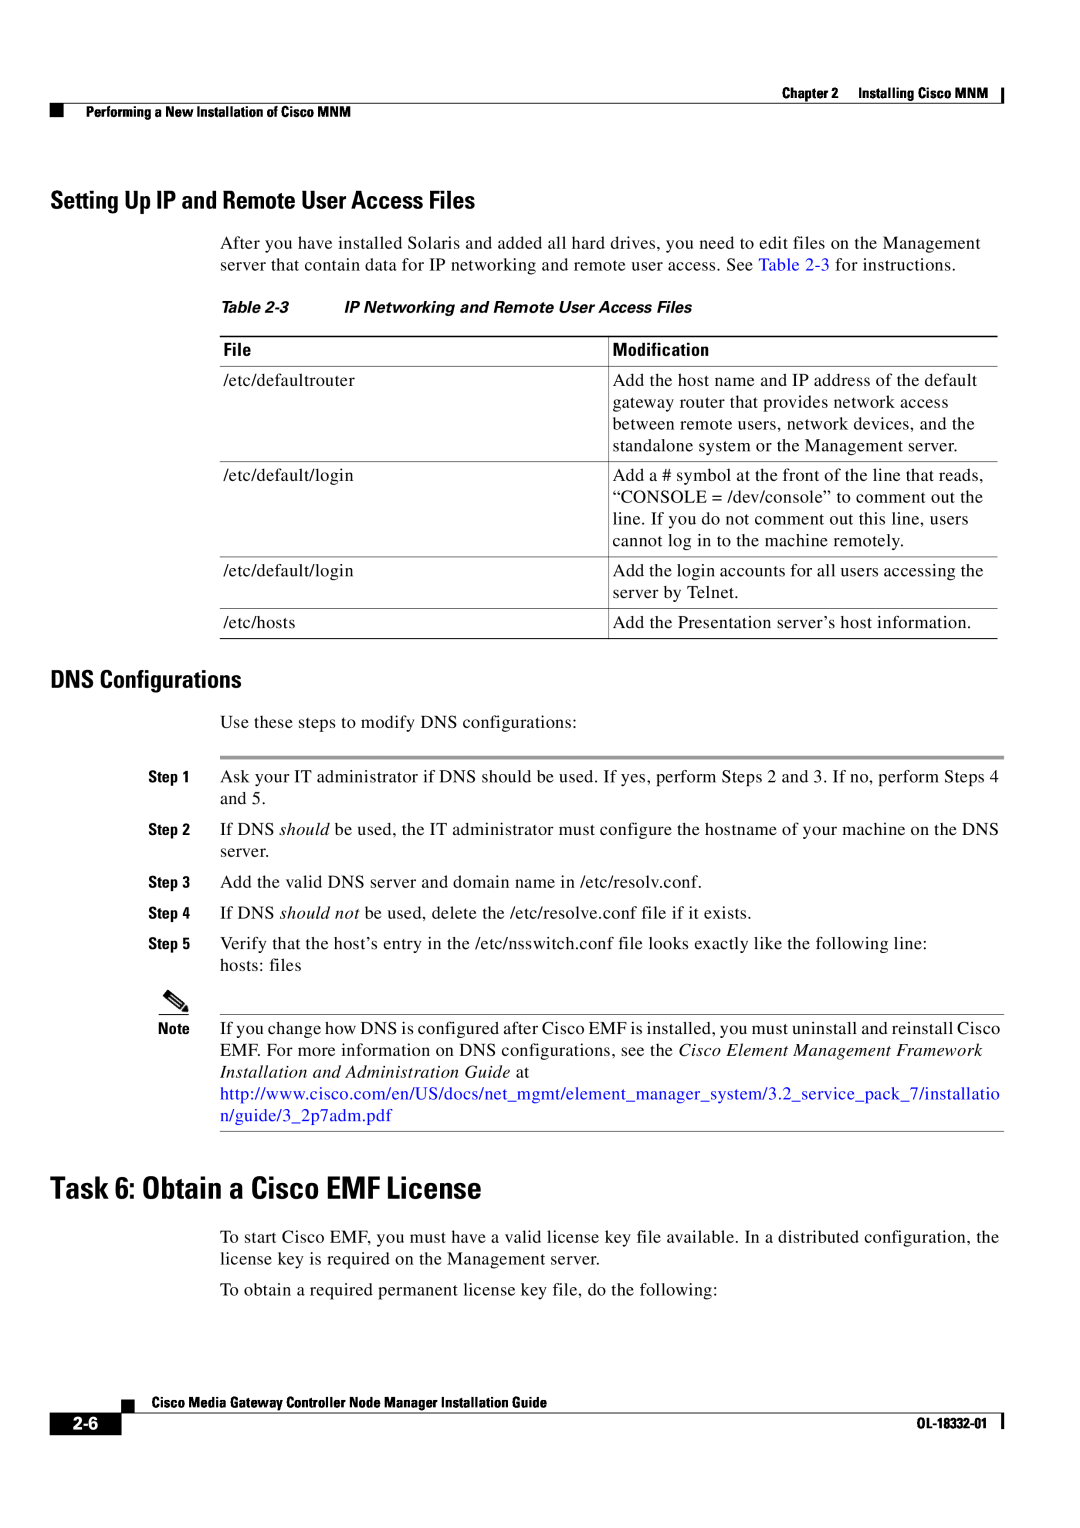 Cisco Systems Media Gateway Controller Node Manager manual Task 6 Obtain a Cisco EMF License, DNS Configurations, File 